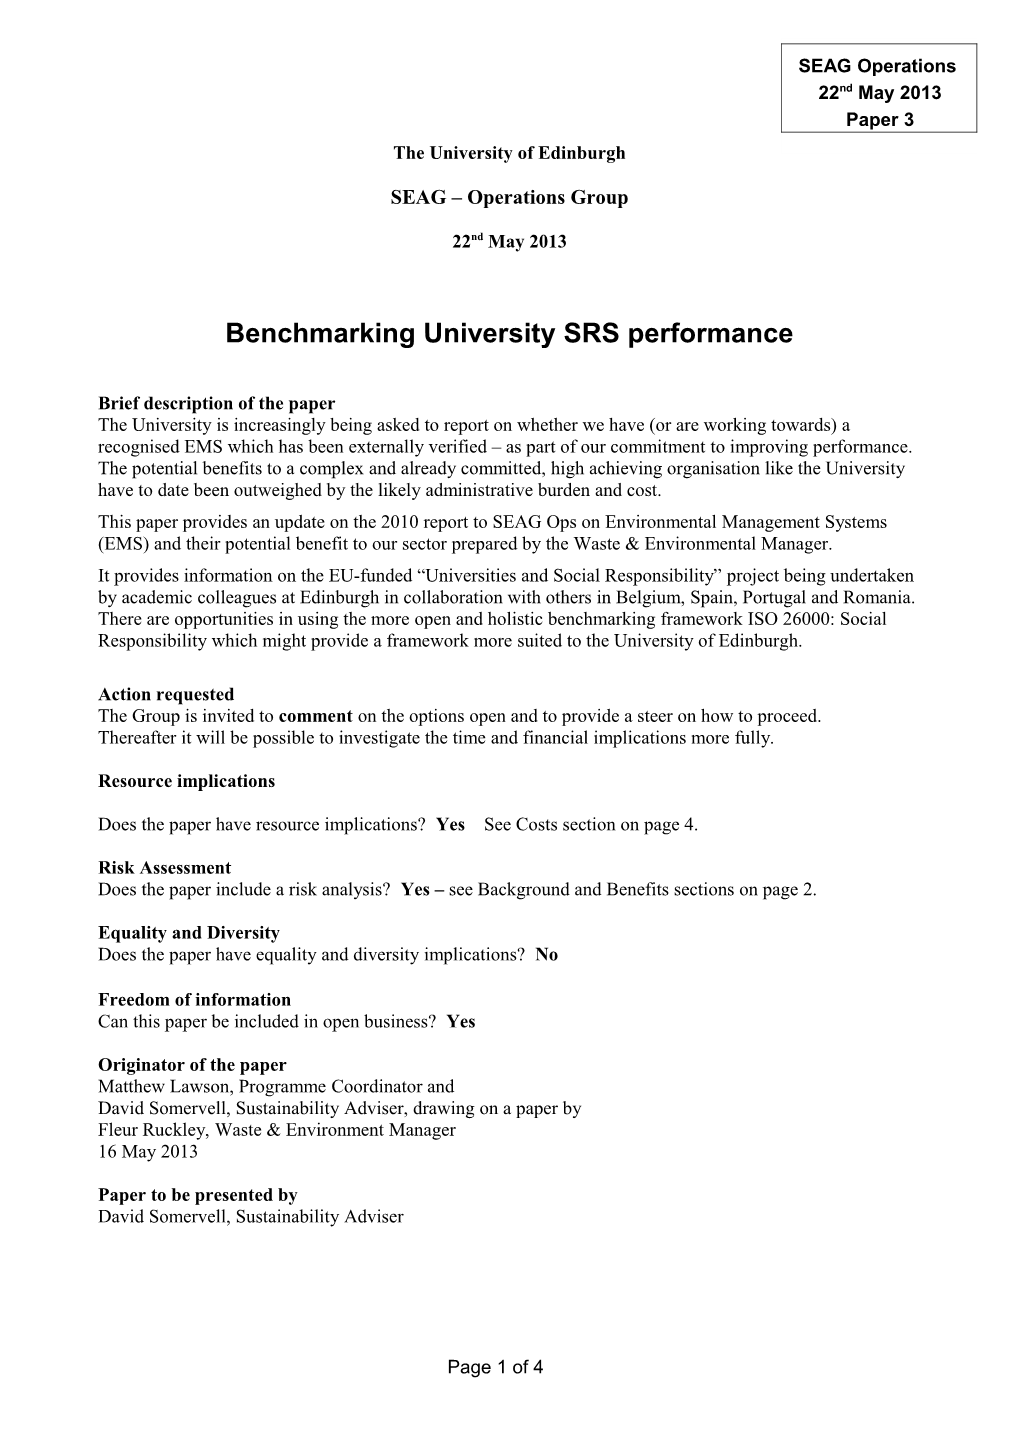 Benchmarking University SRS Performance